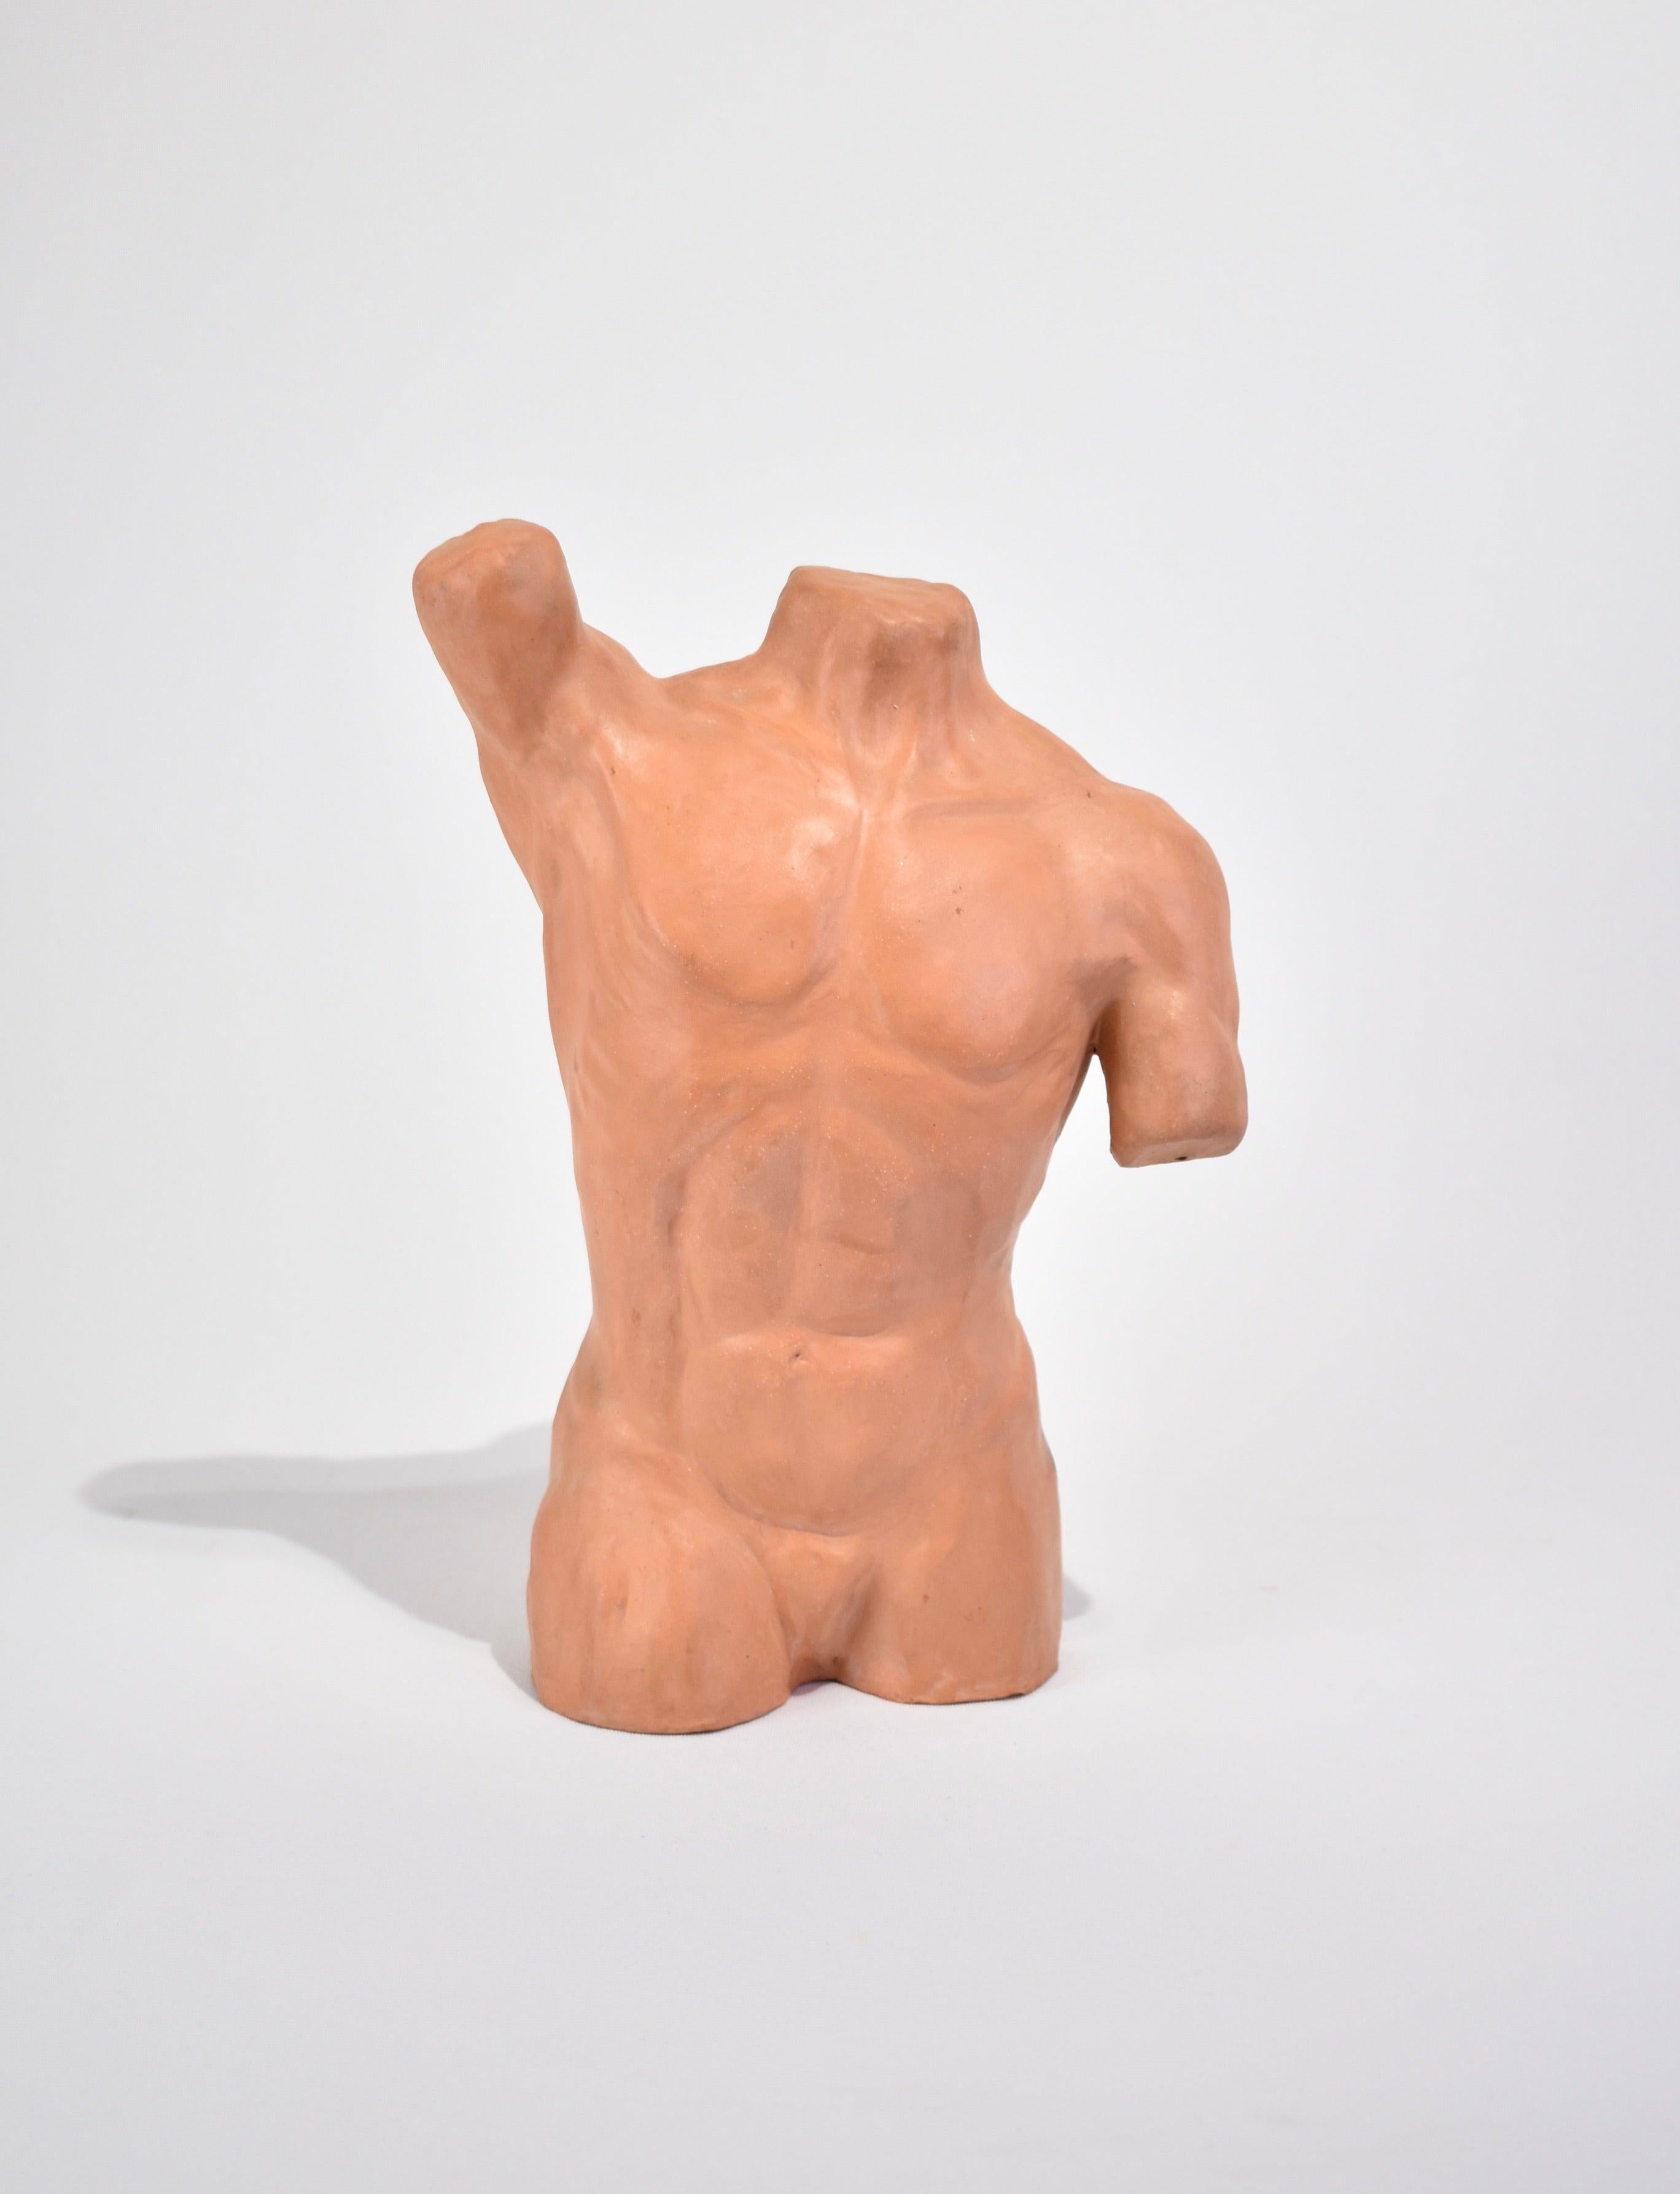 Vintage, handmade male torso sculpture in terracotta.